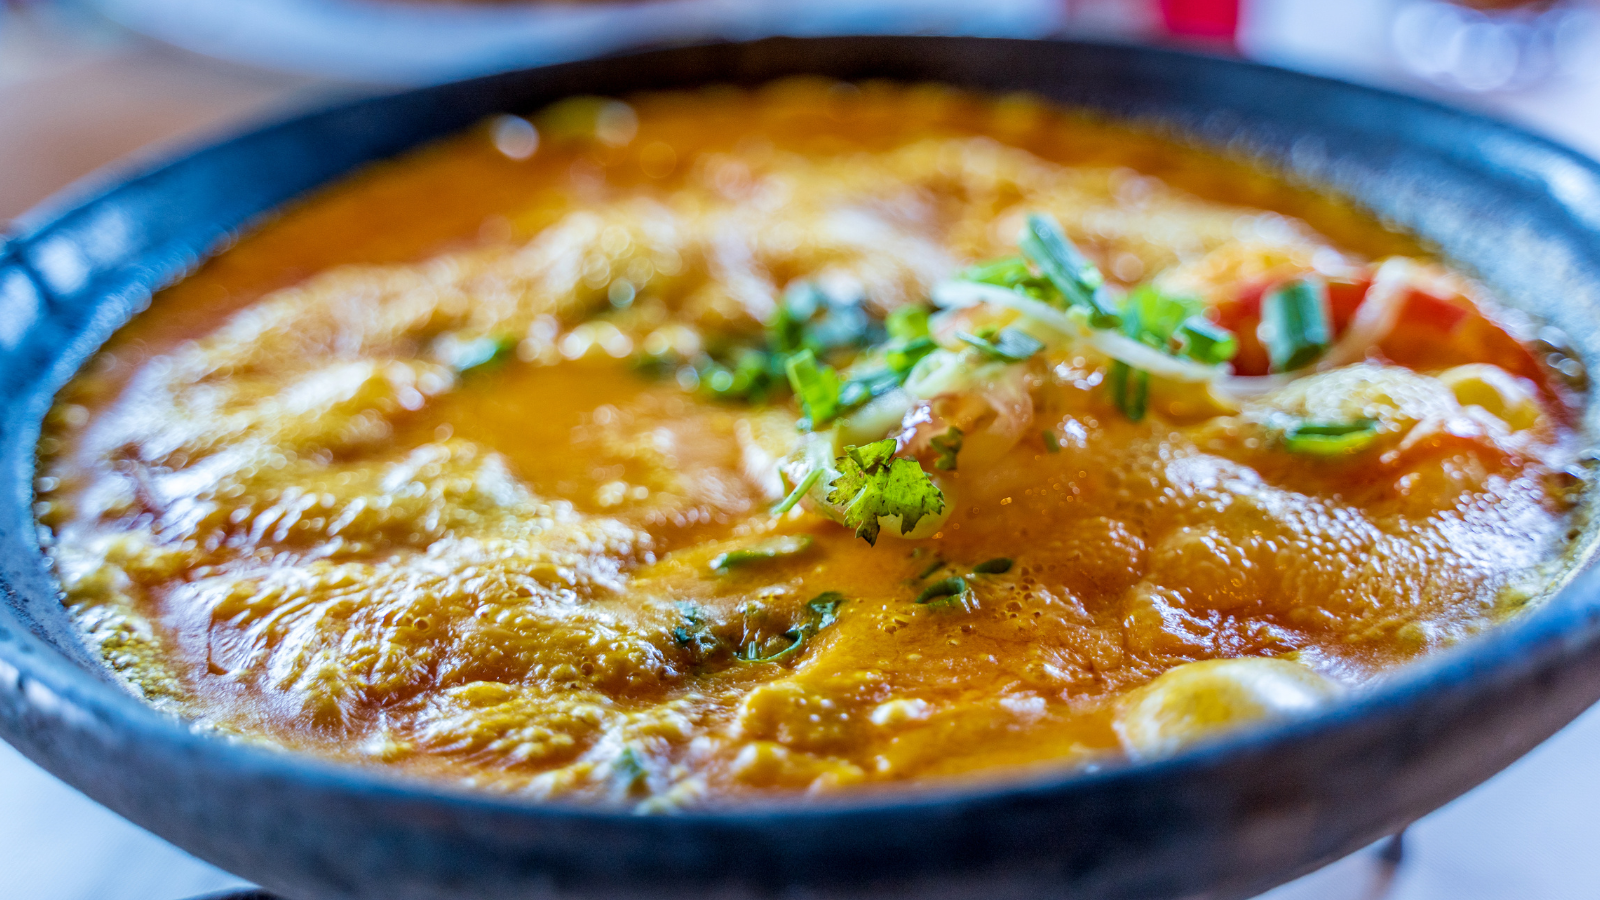 Fish stew, a dish that is popular in restaurants in Keflavik